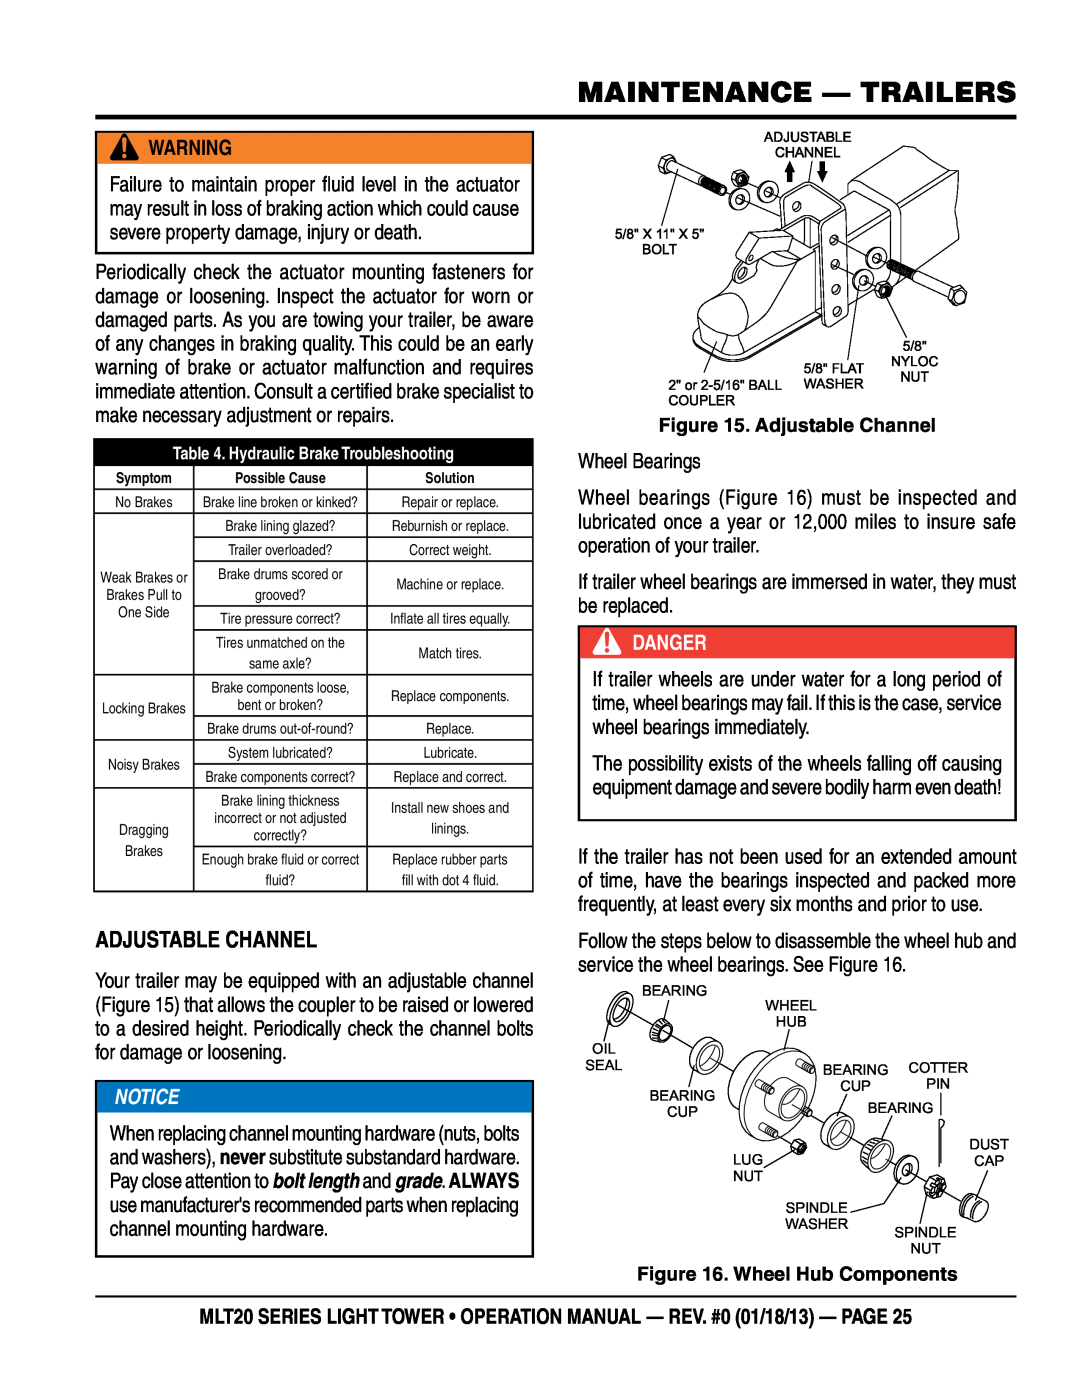 Multi Tech Equipment MLT20DCA6 operation manual Adjustable Channel, maintenance - TRAILERS, Notice, Danger 